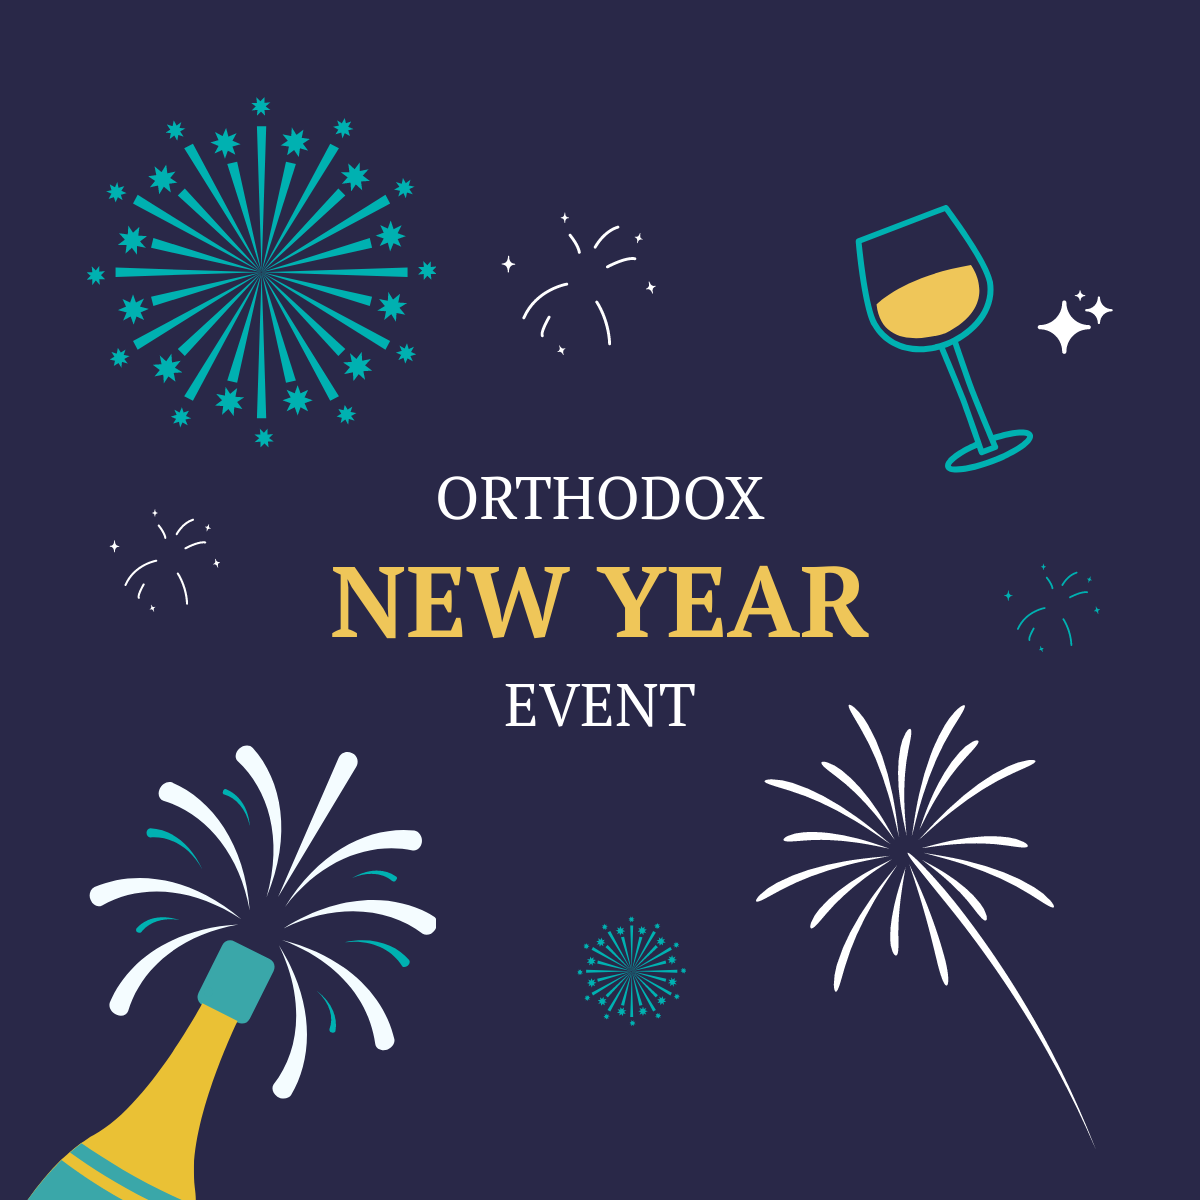 Orthodox New Year Event Linkedin Post Template